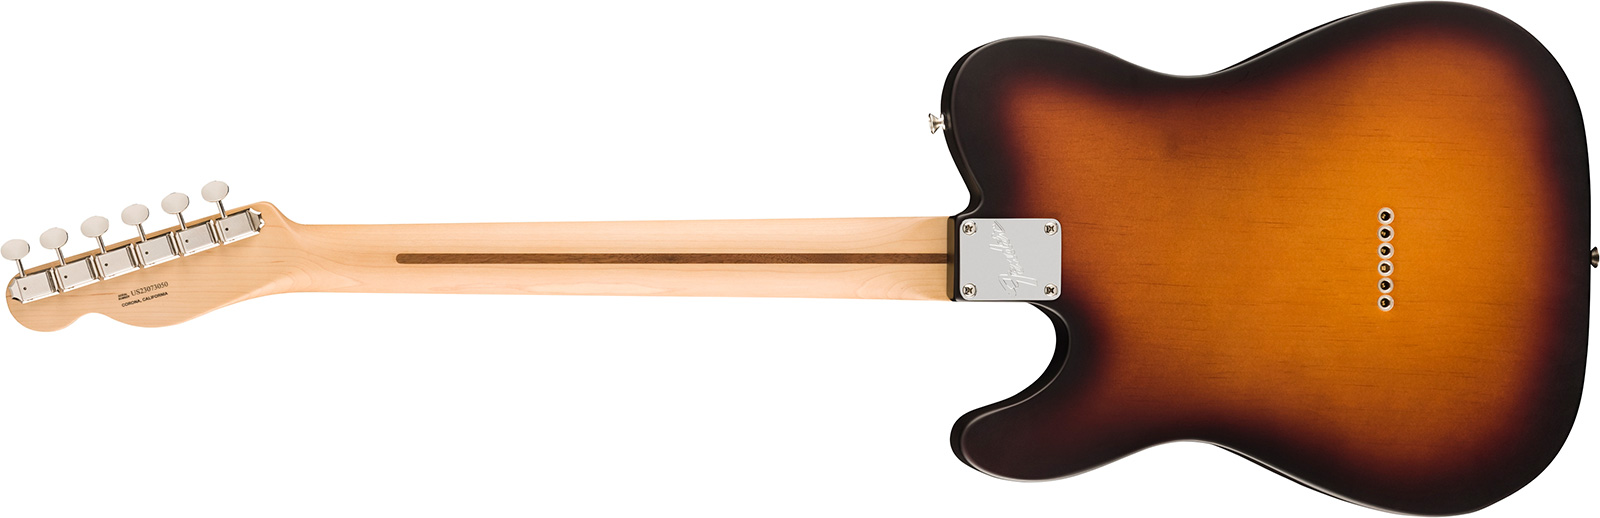 Fender Tele Timber American Performer Fsr Usa 2s Ht Rw - Satin 2-color Sunburst - Televorm elektrische gitaar - Variation 1